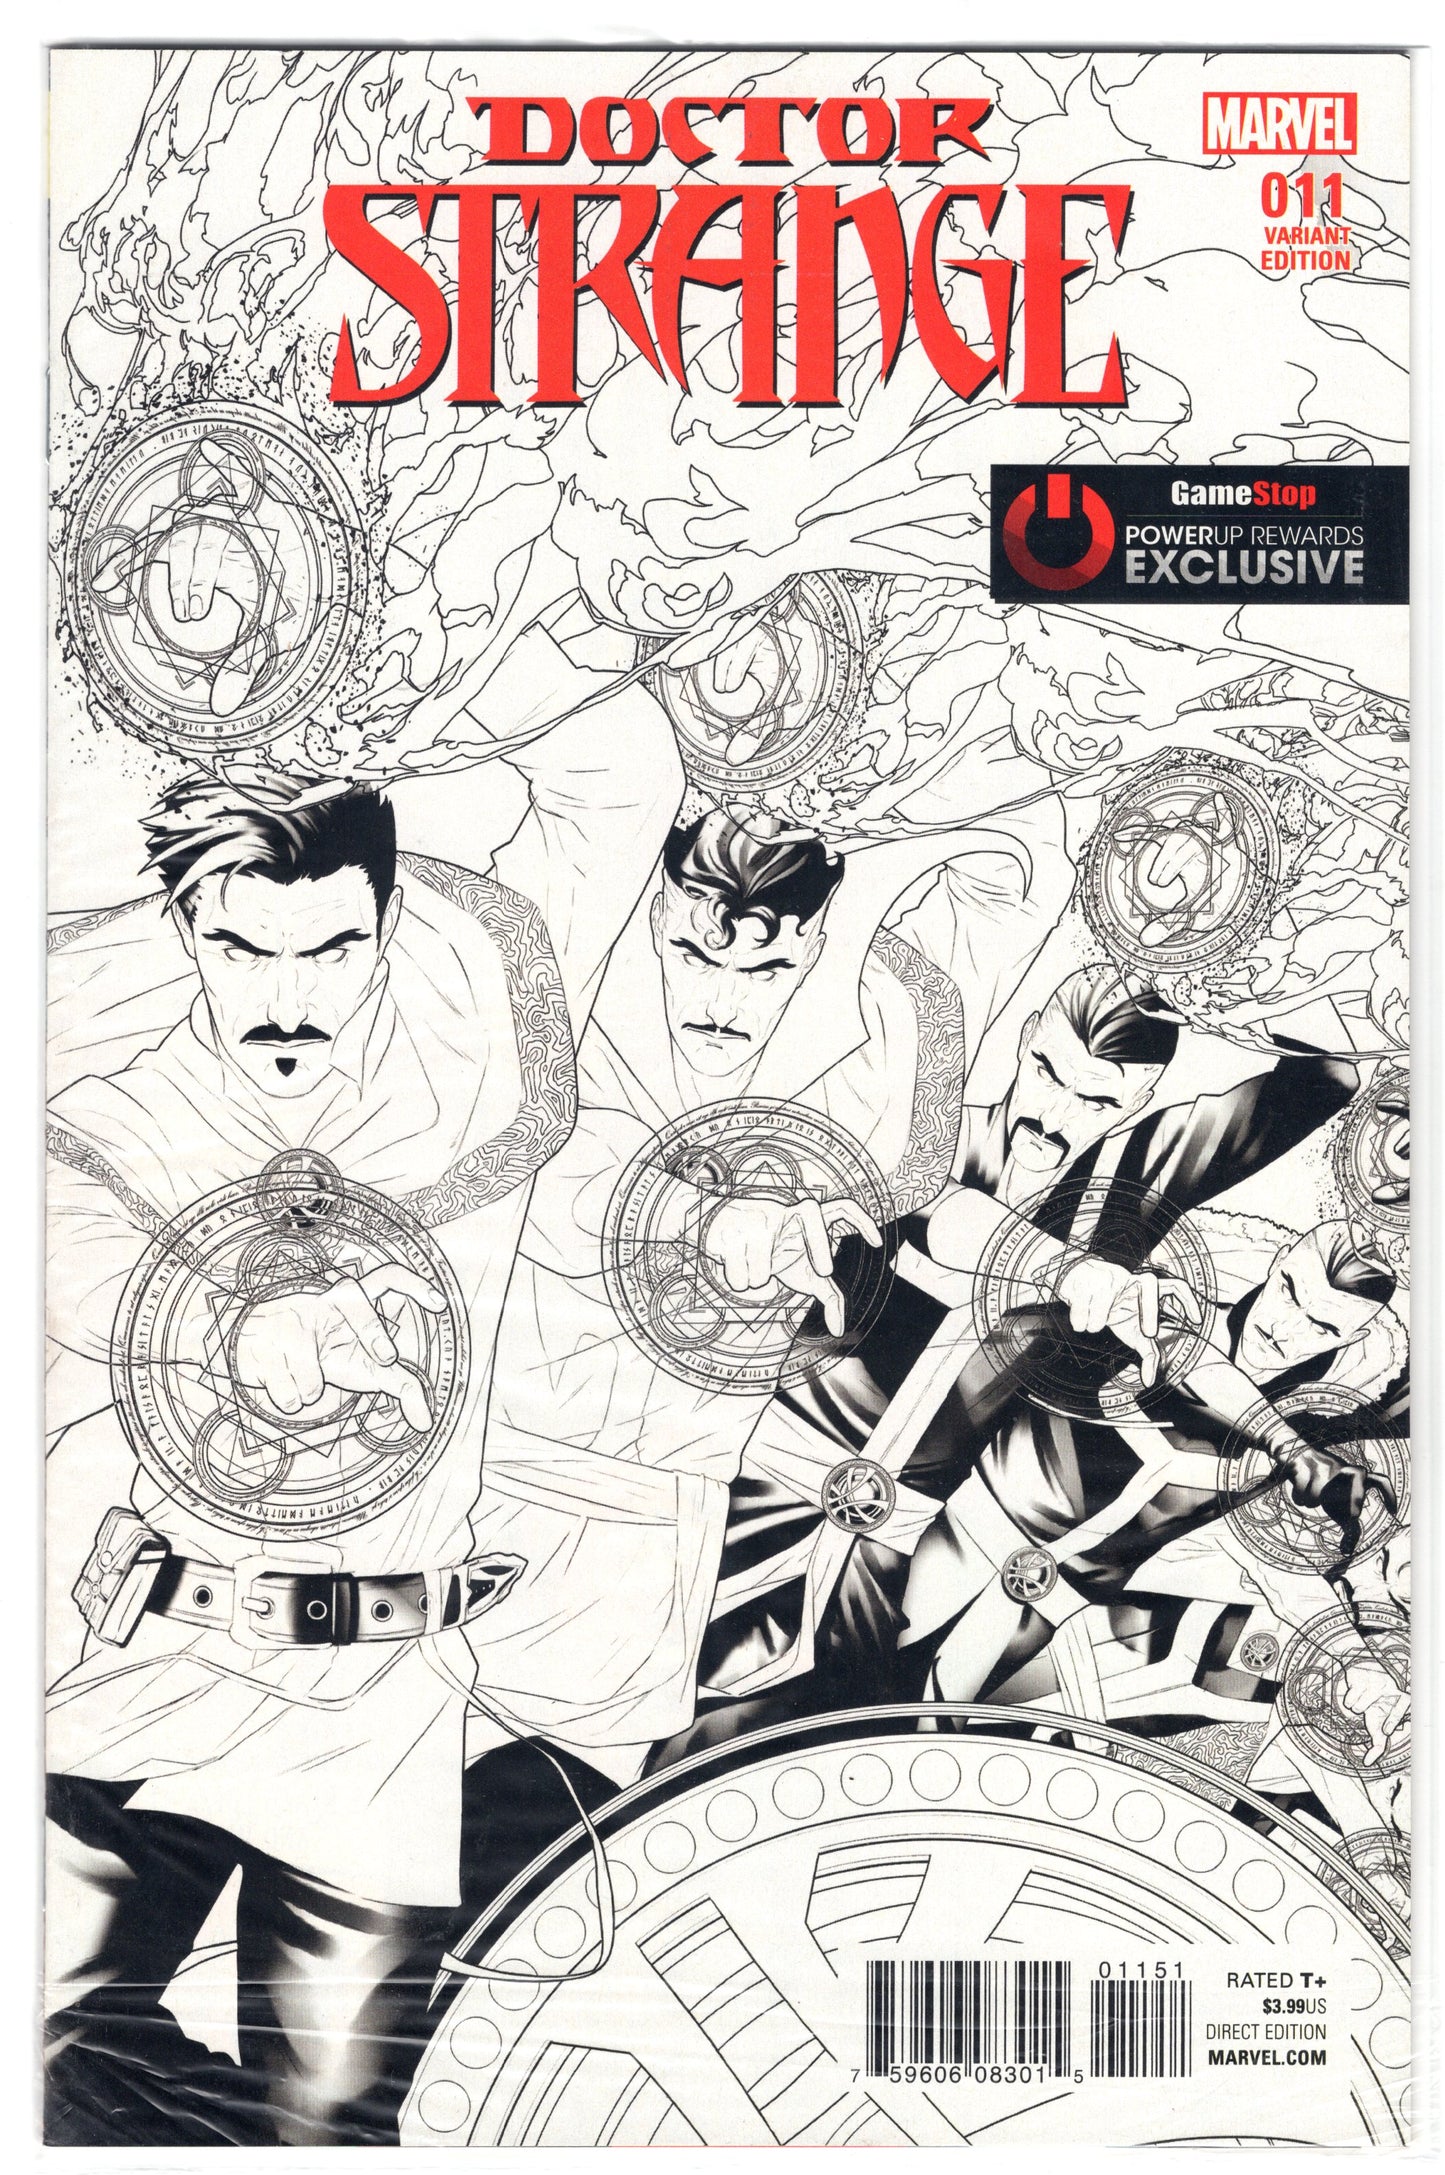 Doctor Strange - Issue #11 "Sealed! Gamestop Exclusive" (Nov. 2016 - Marvel Comics) NM